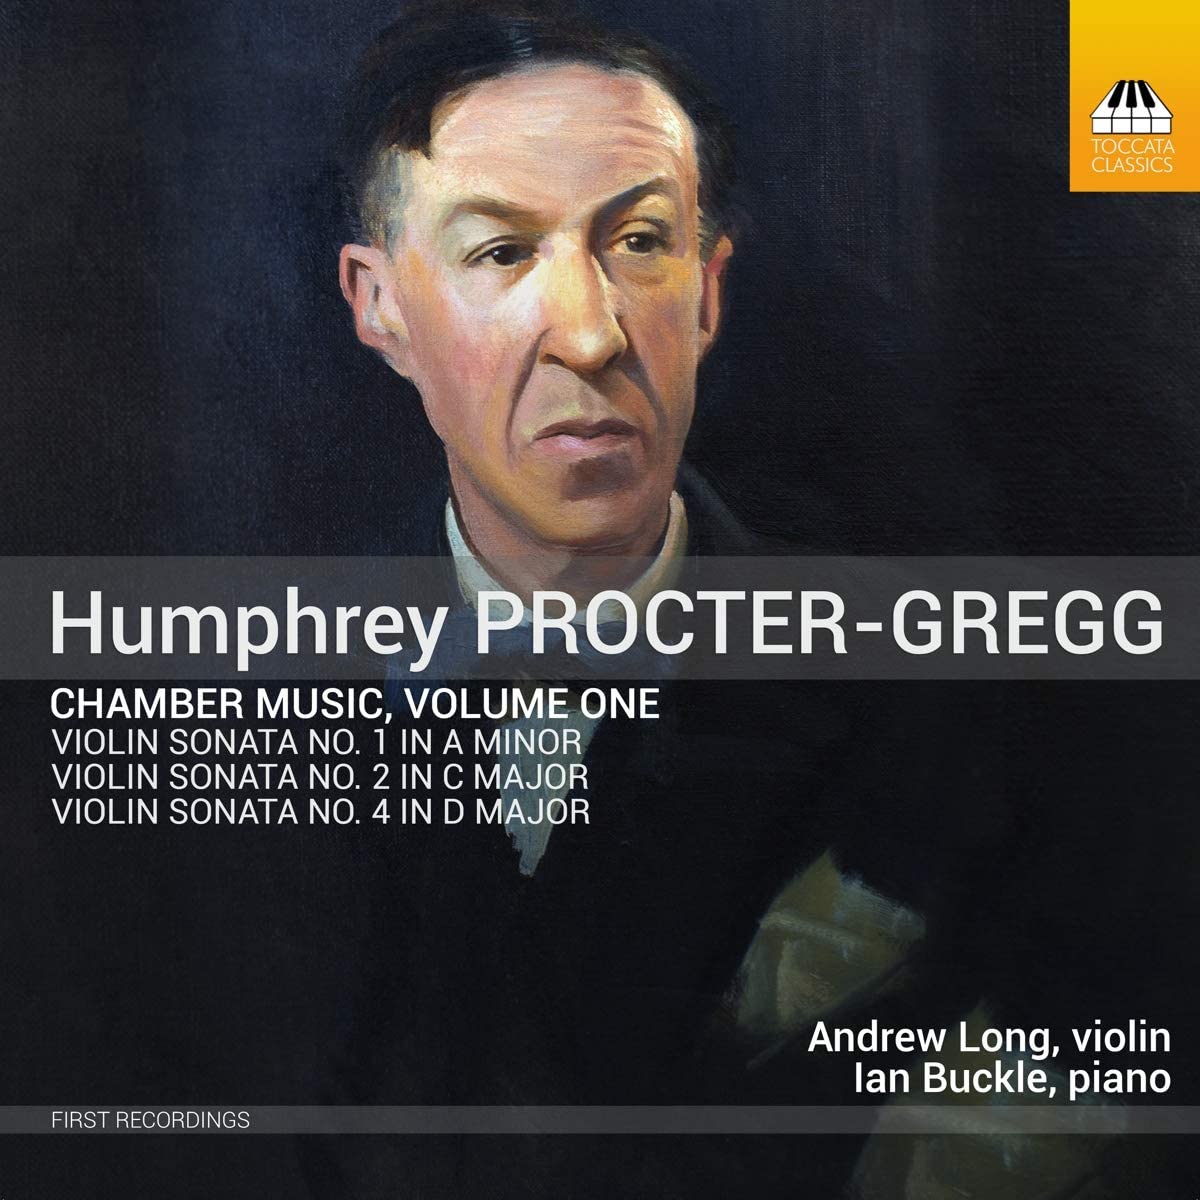 Humphrey Procter-Gregg